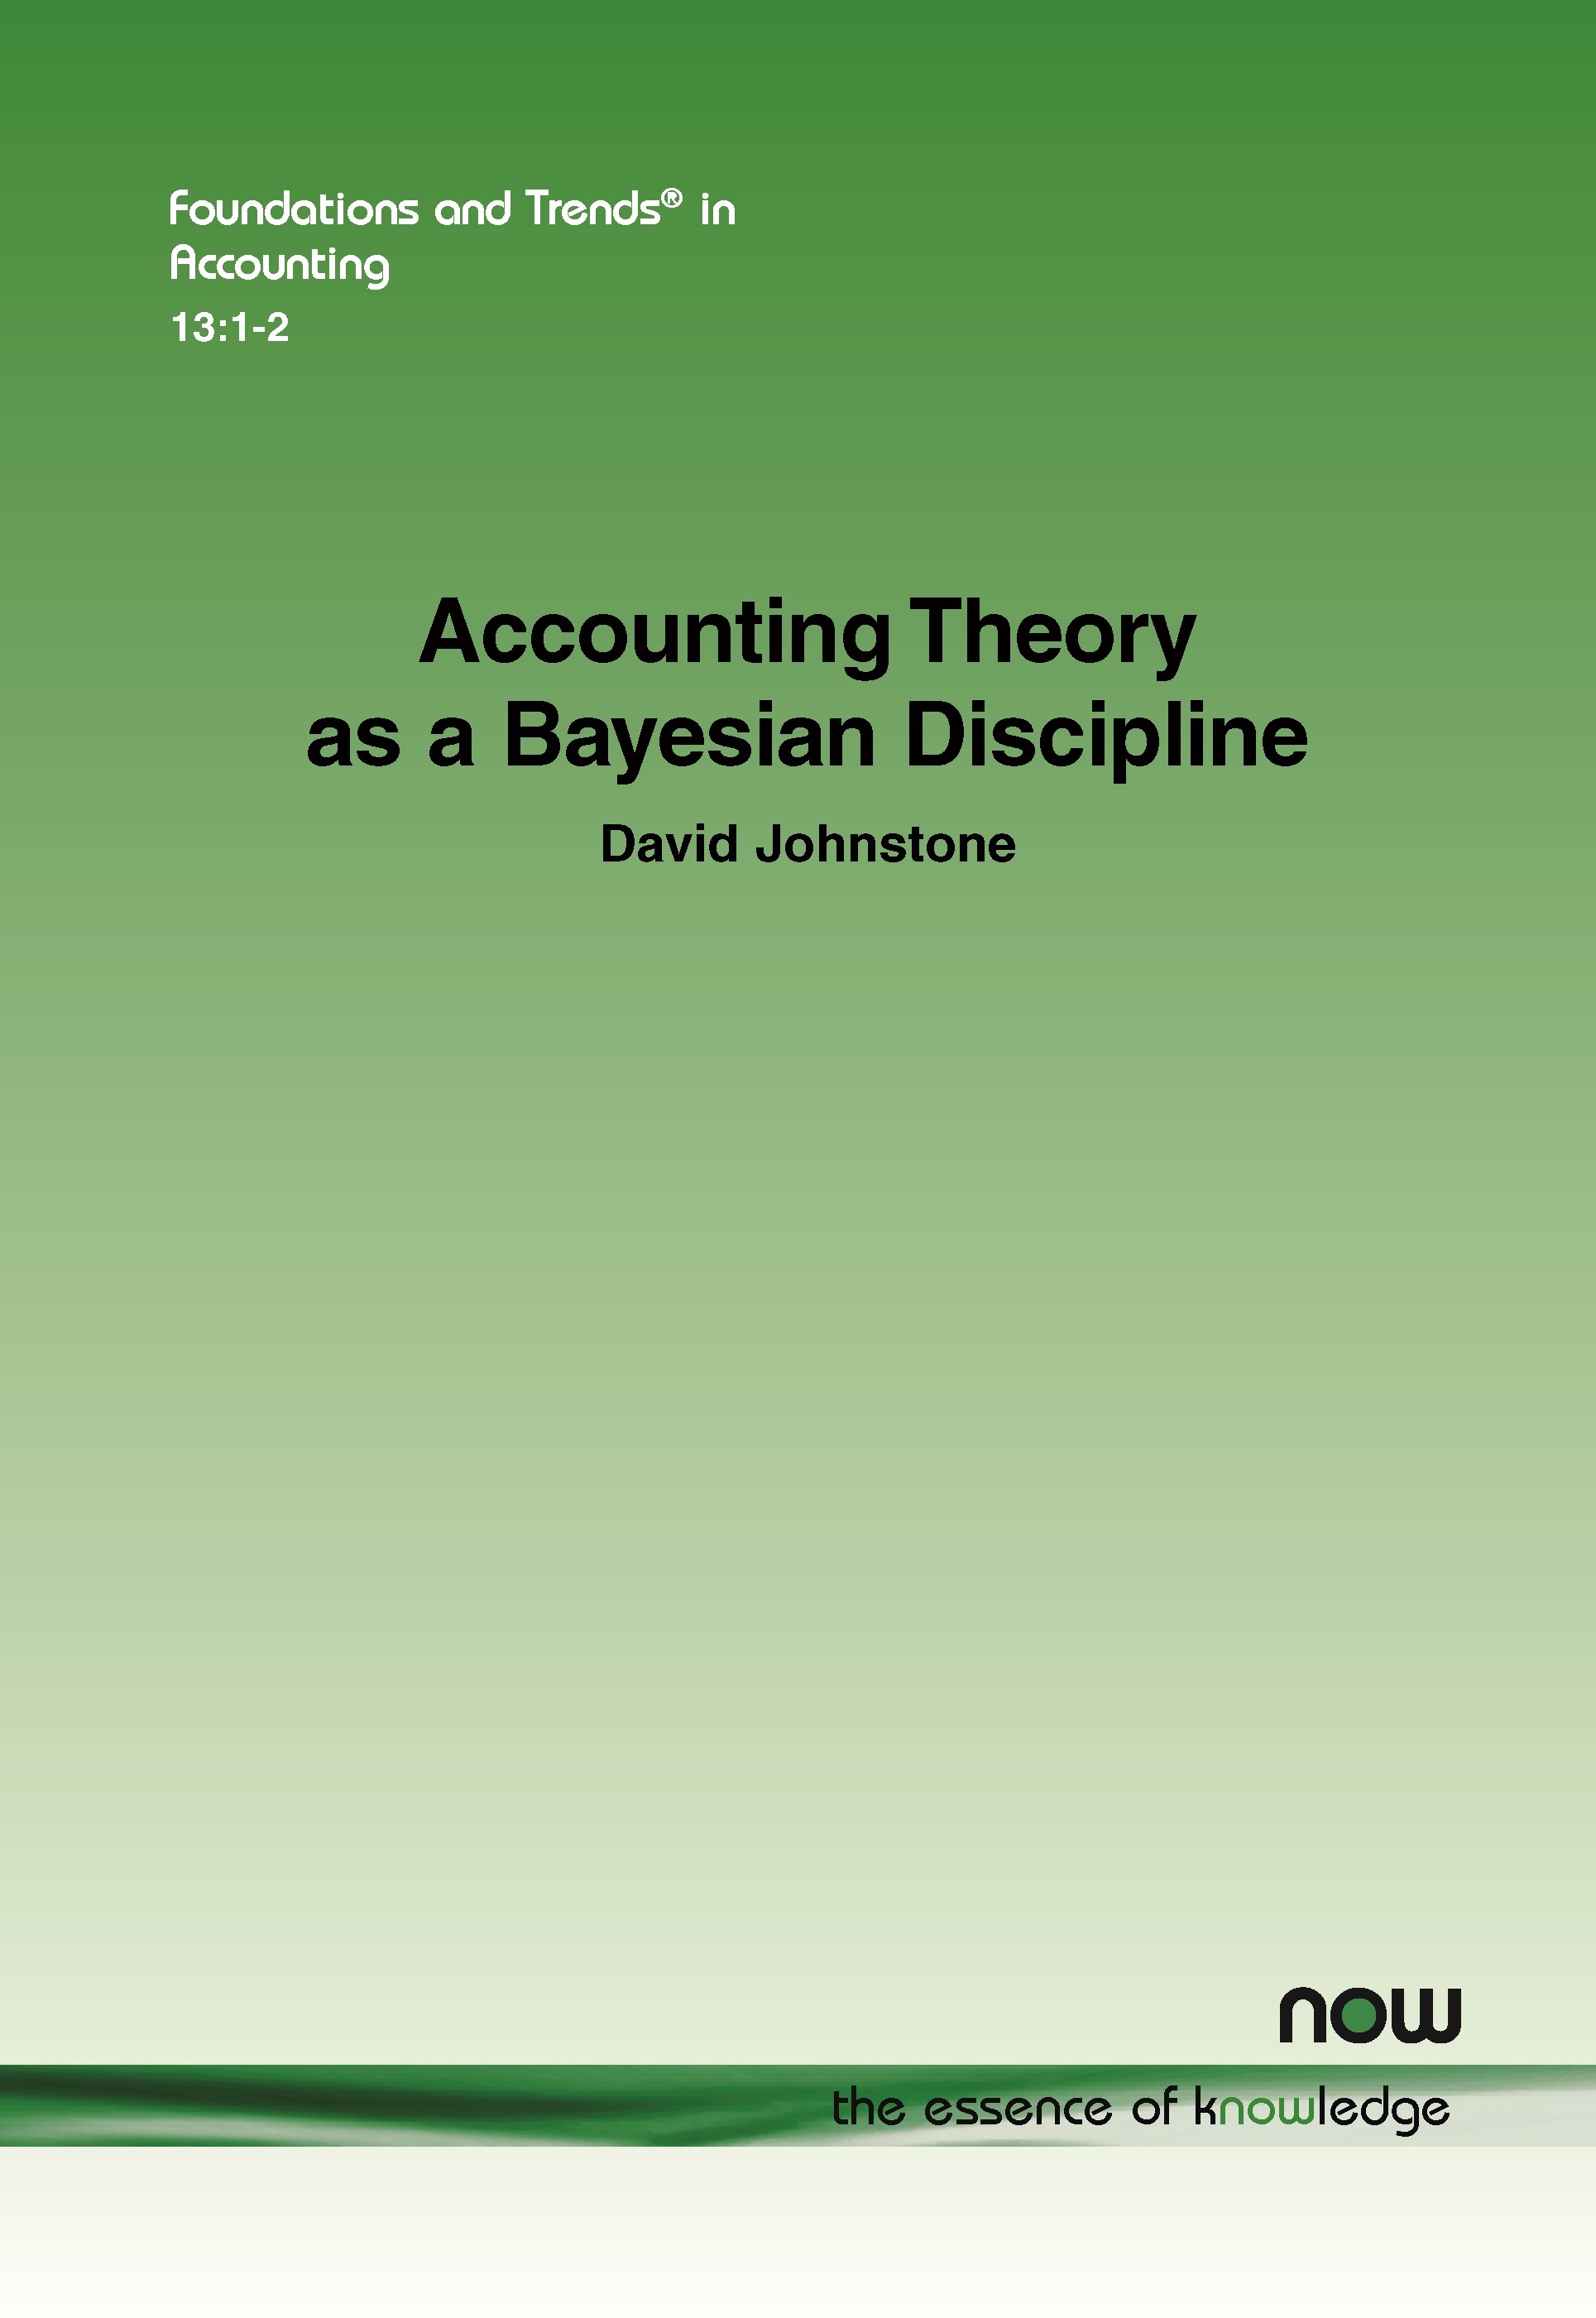 Accounting Theory as a Bayesian Discipline